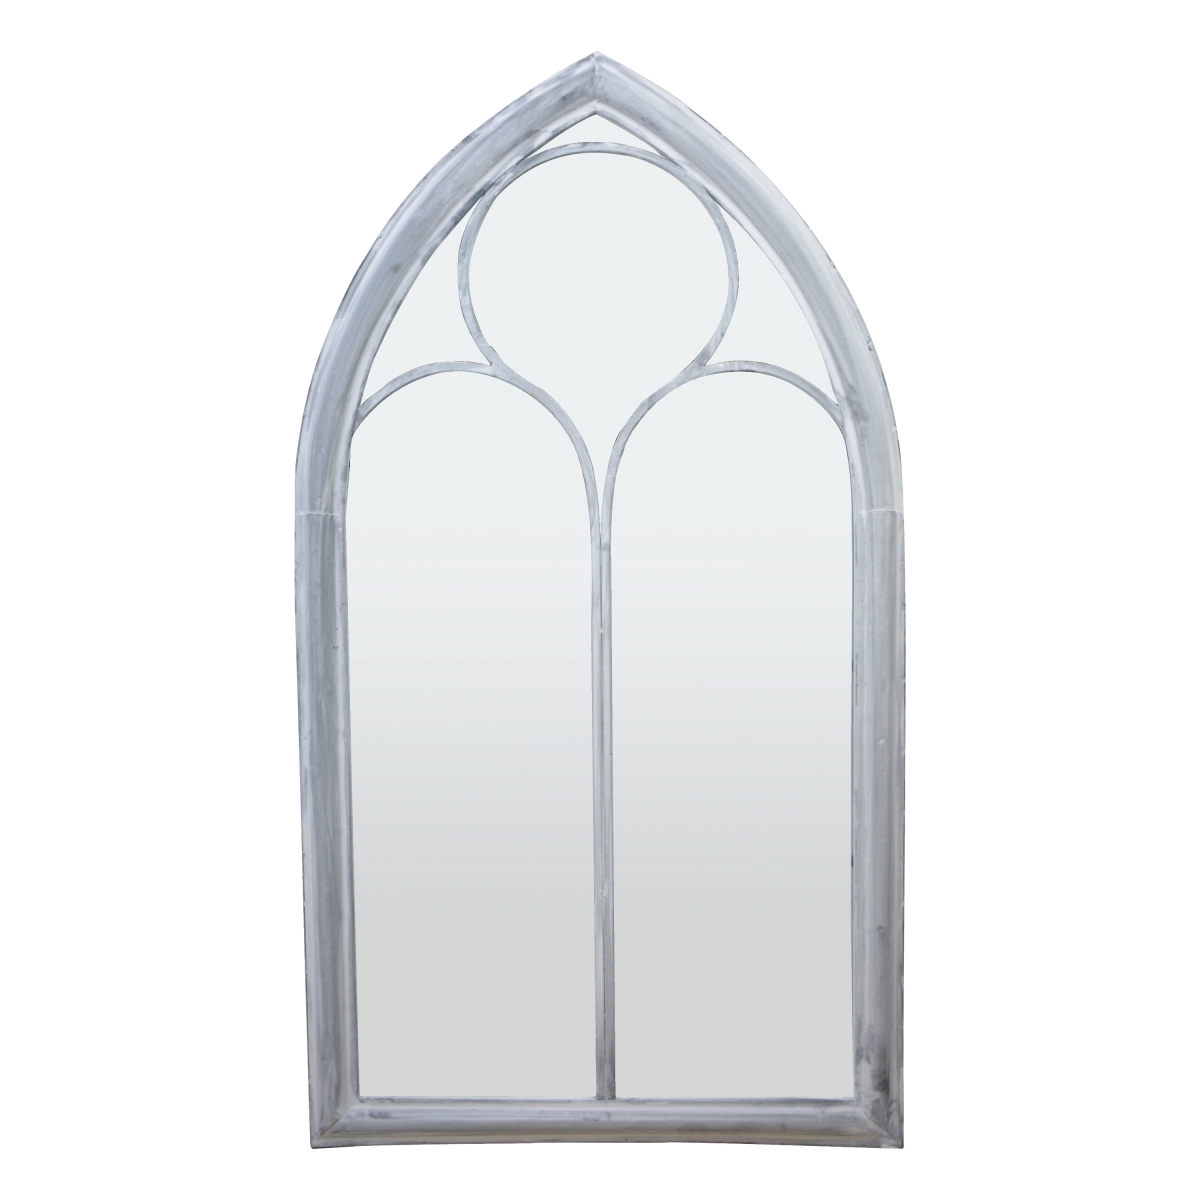 Wd29 Church Window Mirror